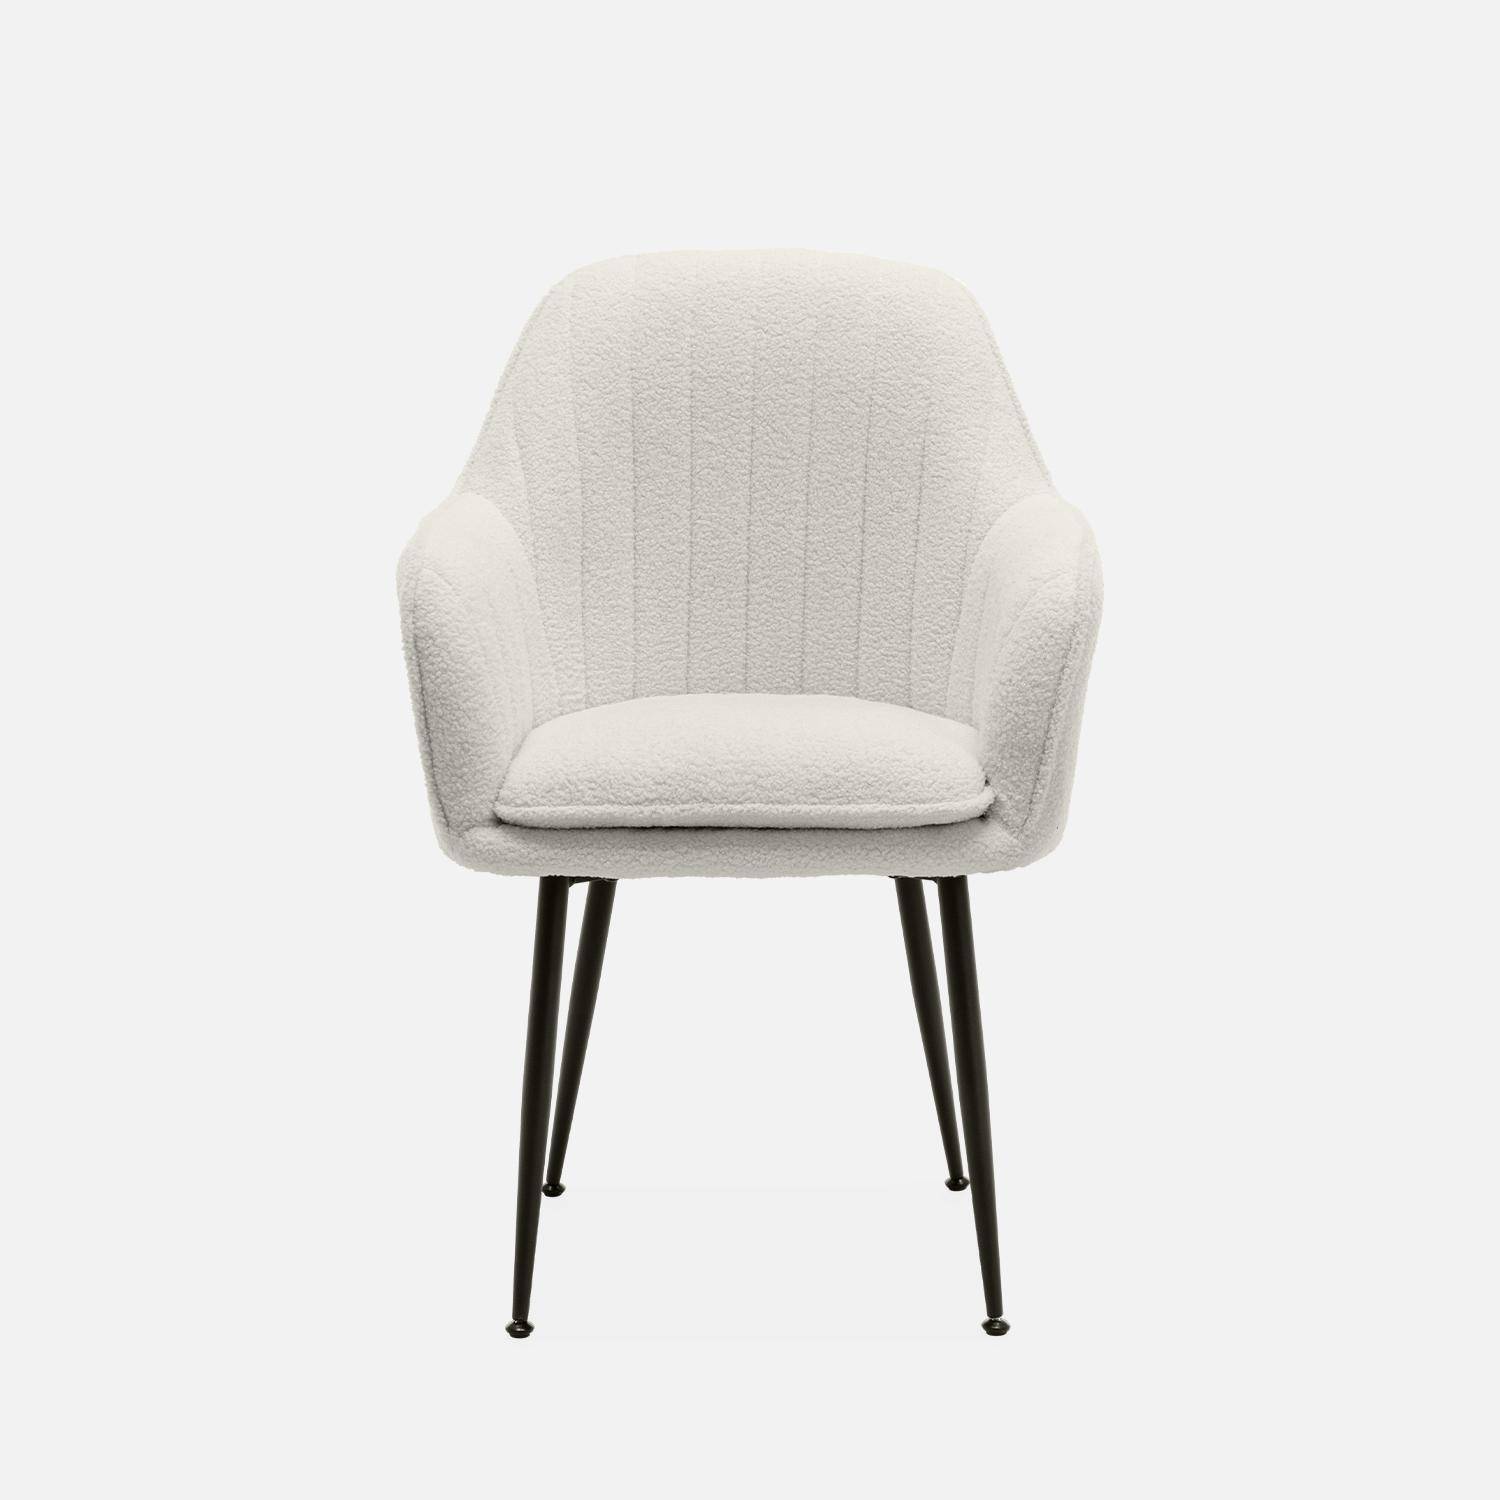 Boucle armchair with metal legs, 58x58x85cm - Shella Boucle - White Photo4